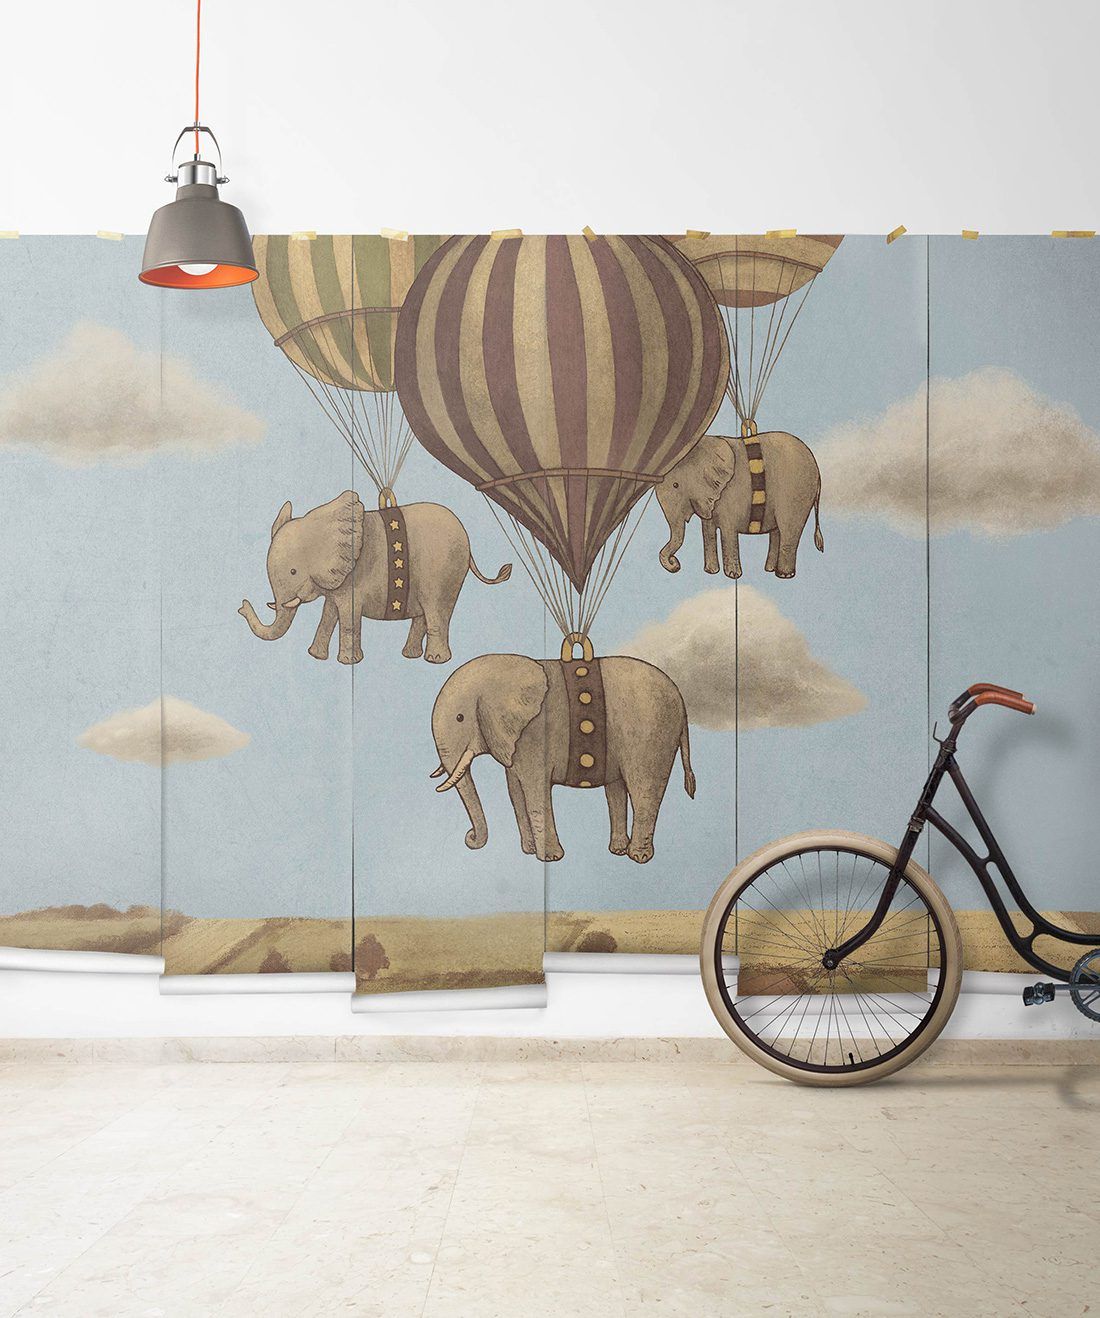 Flight of the Elephants is a cute elephant wall mural